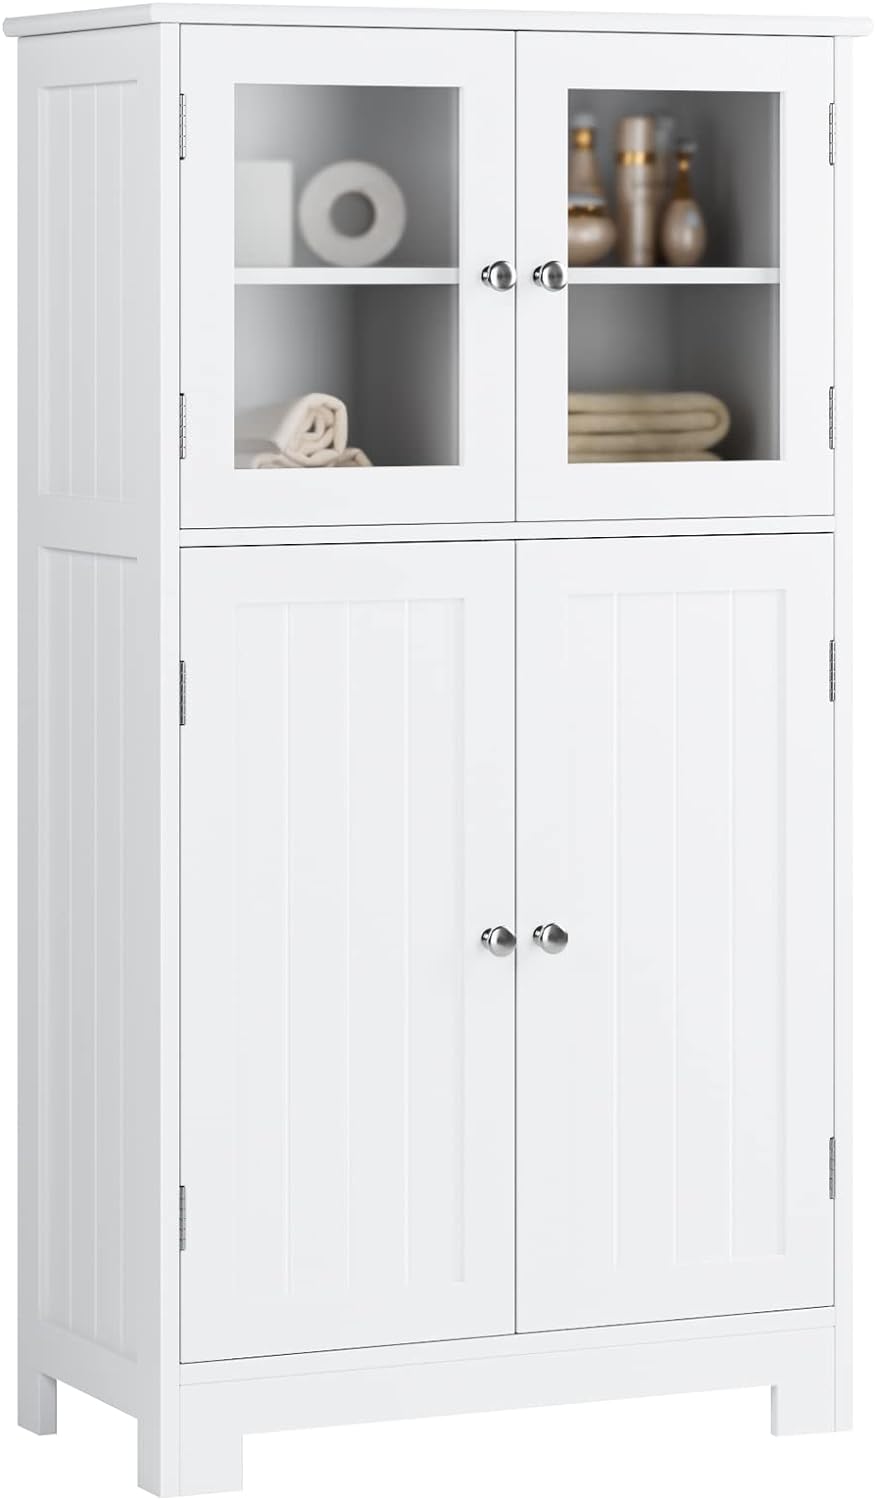 HORSTORS Bathroom Cabinet, Linen Storage Cabinet with Doors, Wooden Floor Cabinet with Adjustable Shelves for Bathroom, Living Room, Office, White